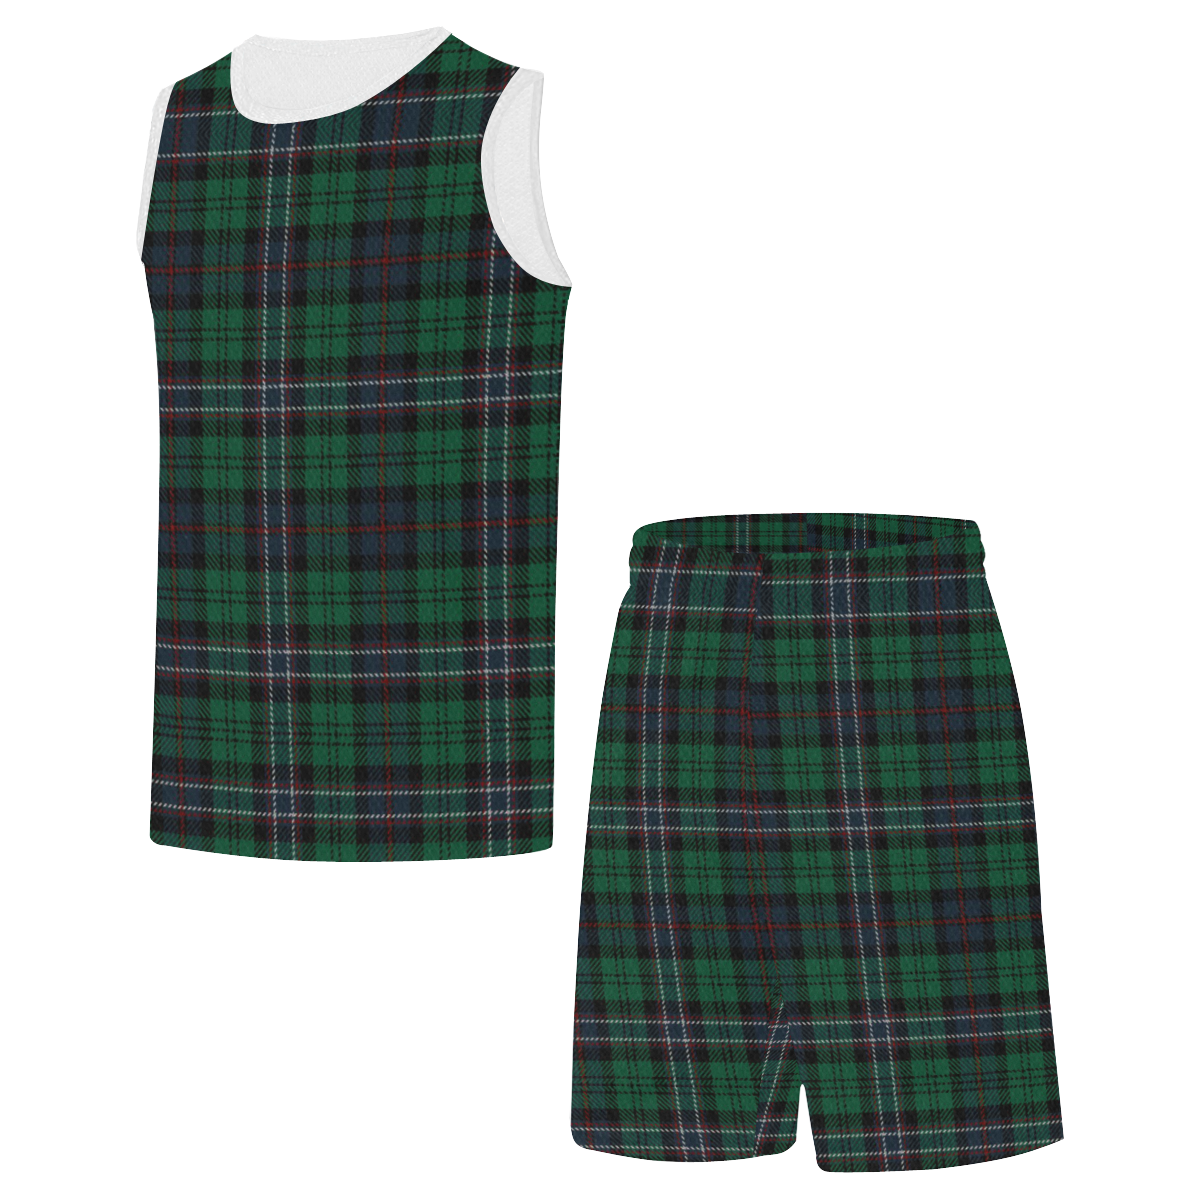 Scottish National Tartan All Over Print Basketball Uniform